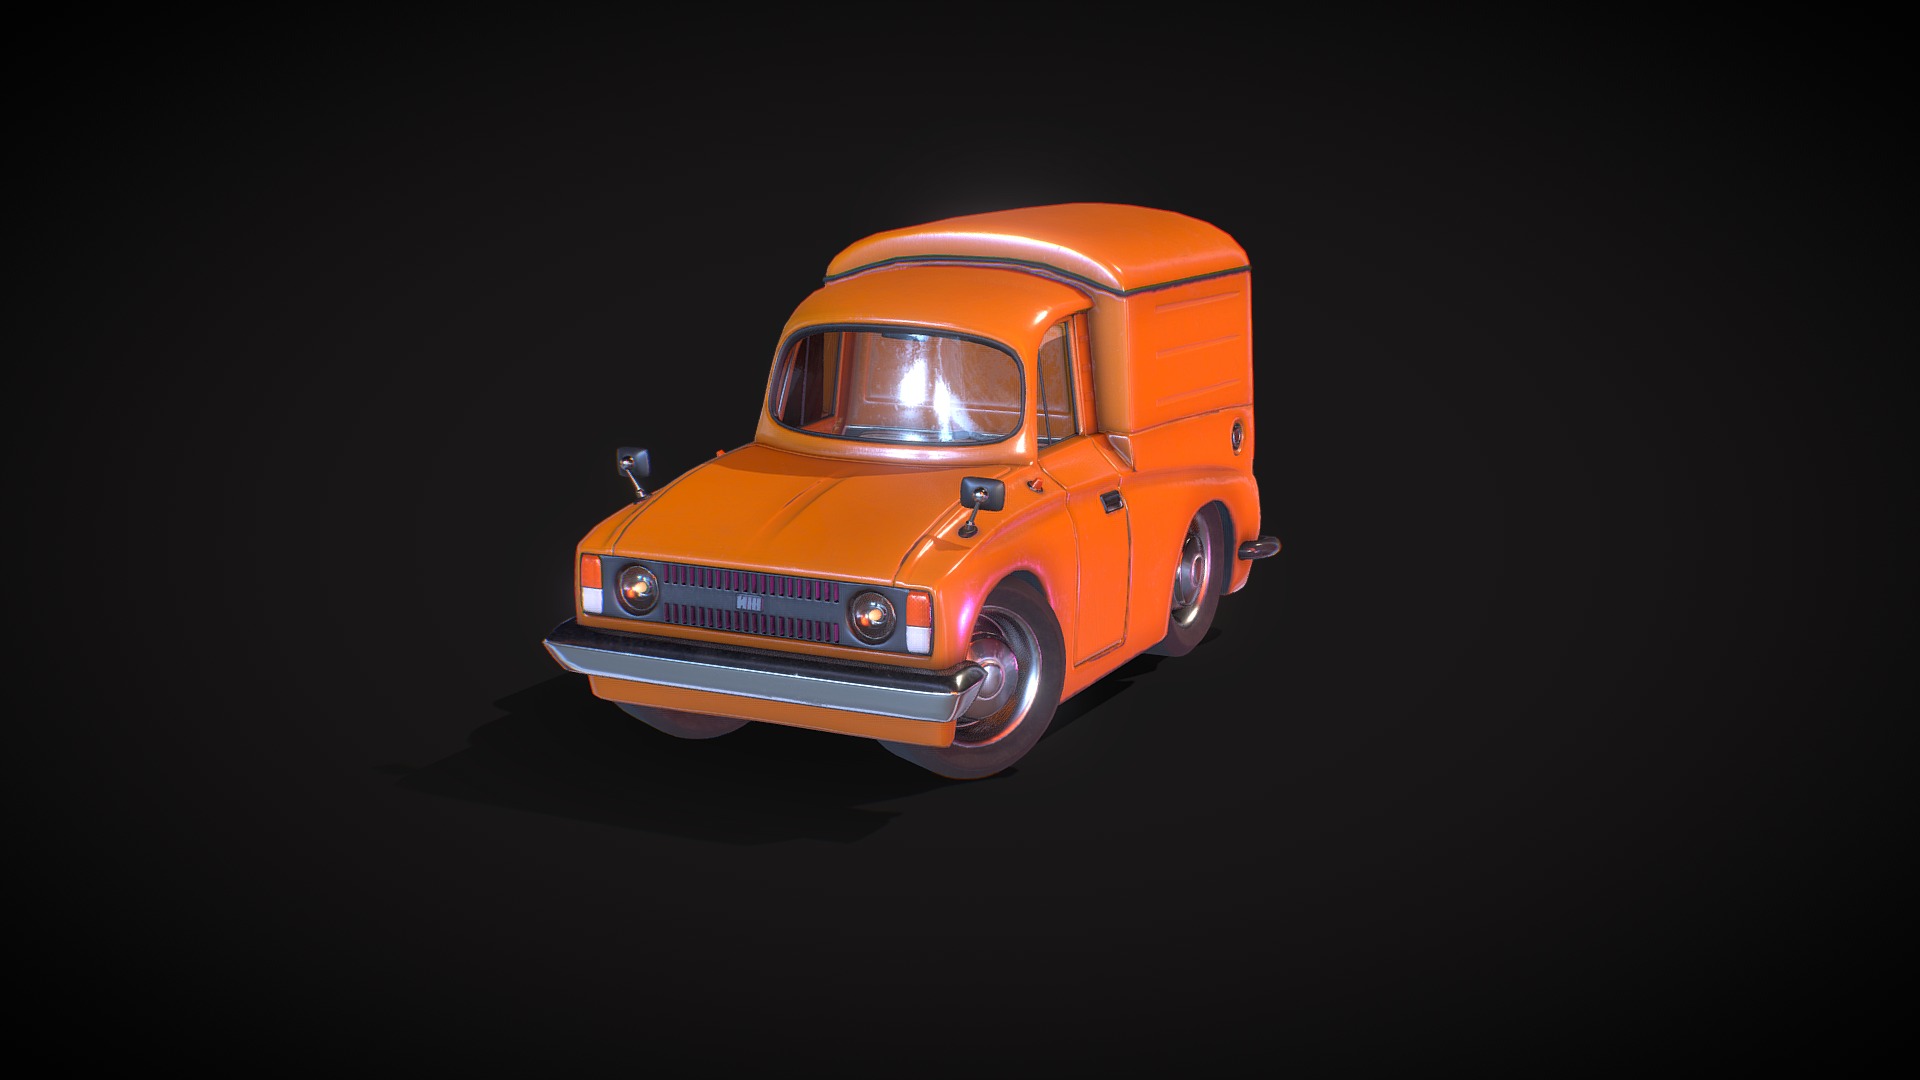 3D model ИЖ-2715 (IZH-2715) - This is a 3D model of the ИЖ-2715 (IZH-2715). The 3D model is about an orange car with a black background.